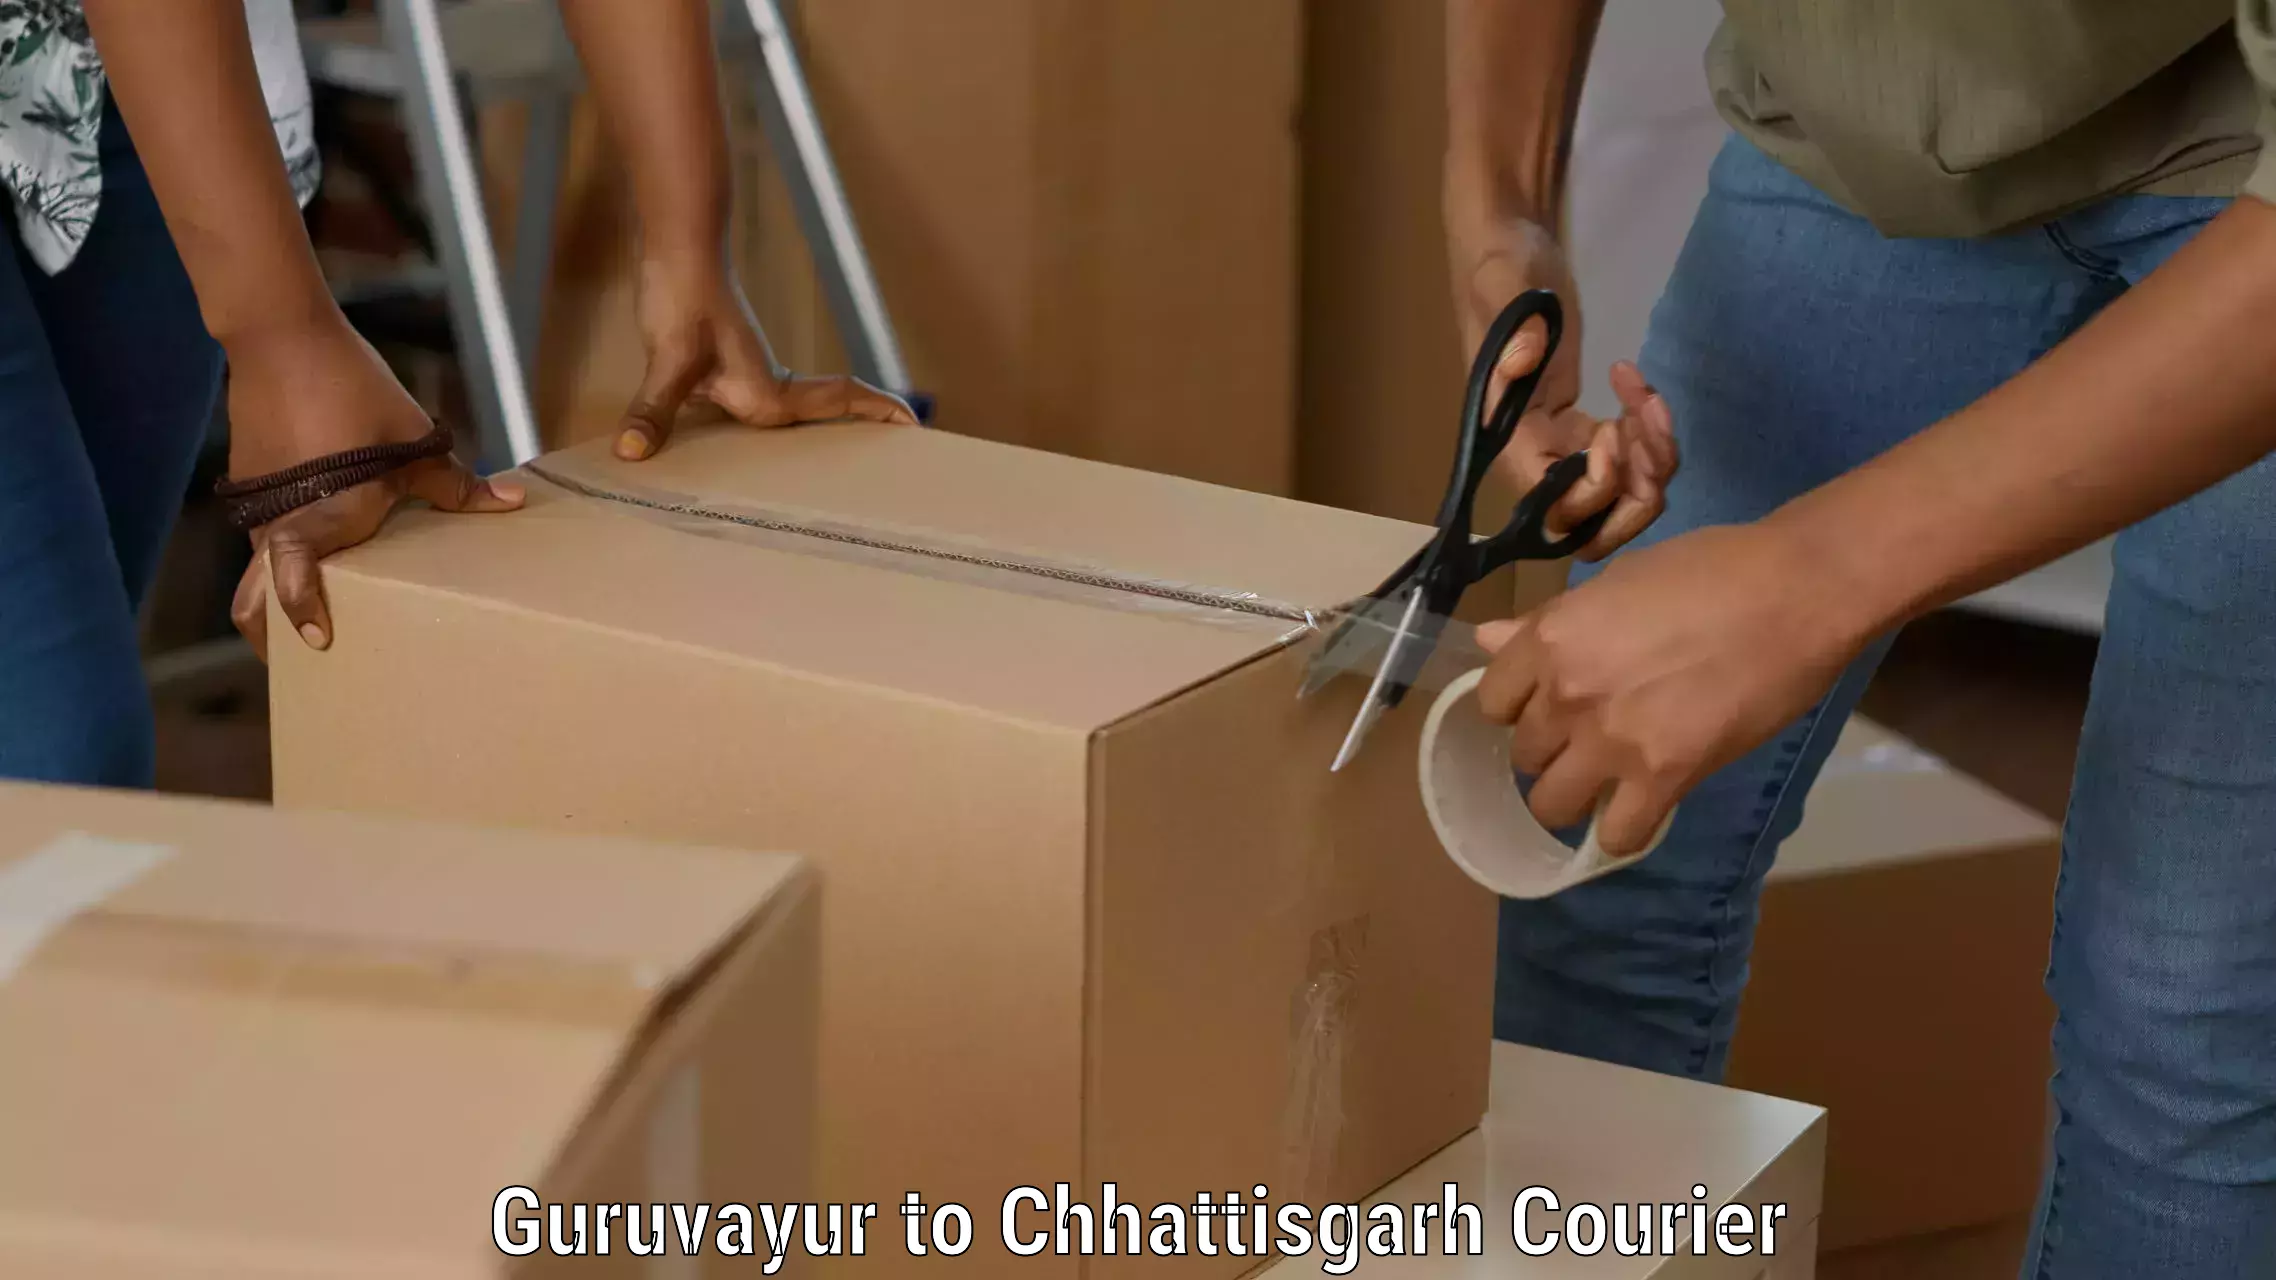 Efficient order fulfillment in Guruvayur to Ambikapur